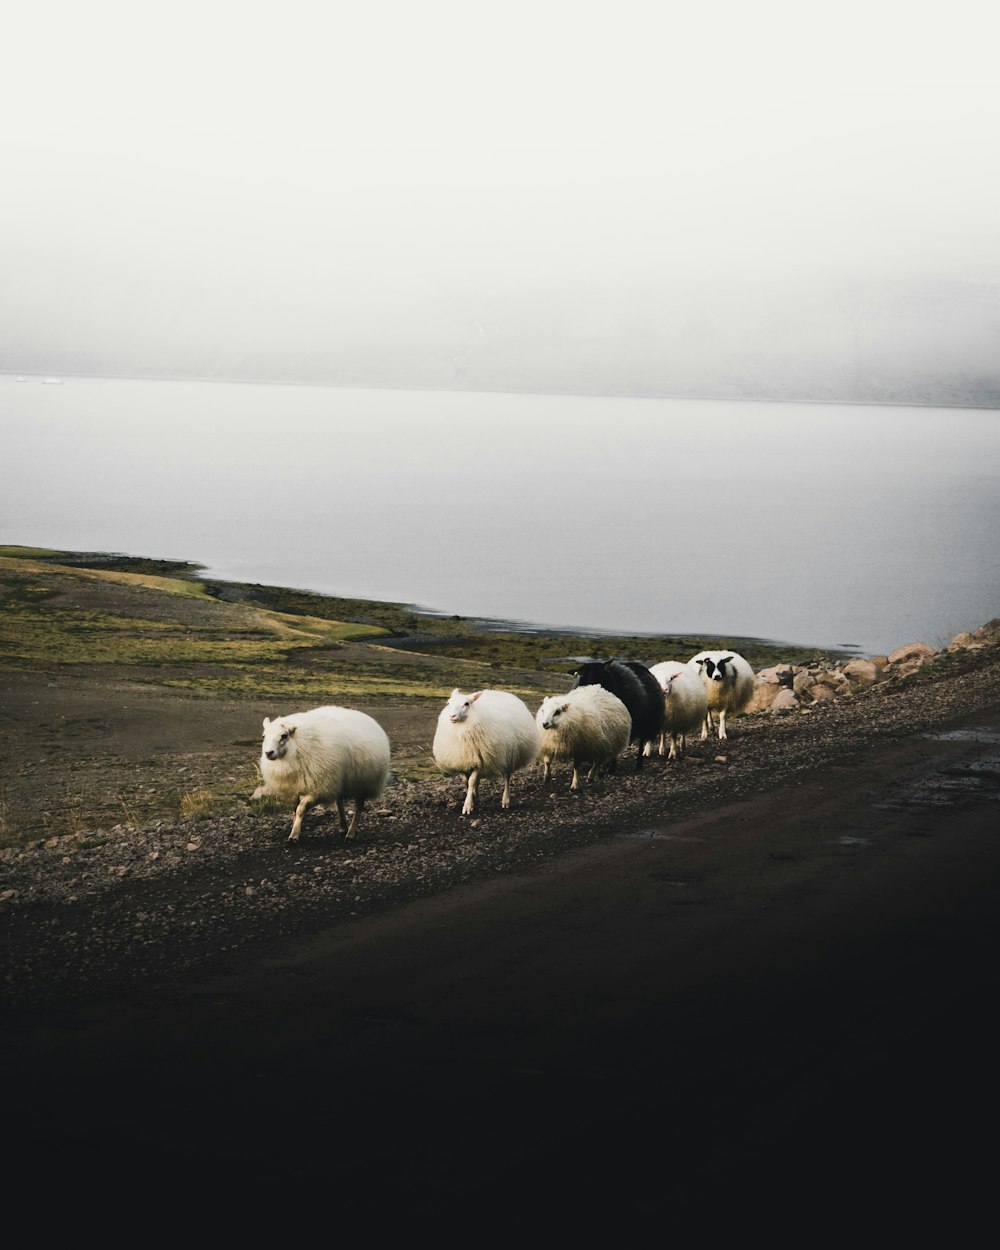 white sheep falling in line near body of water